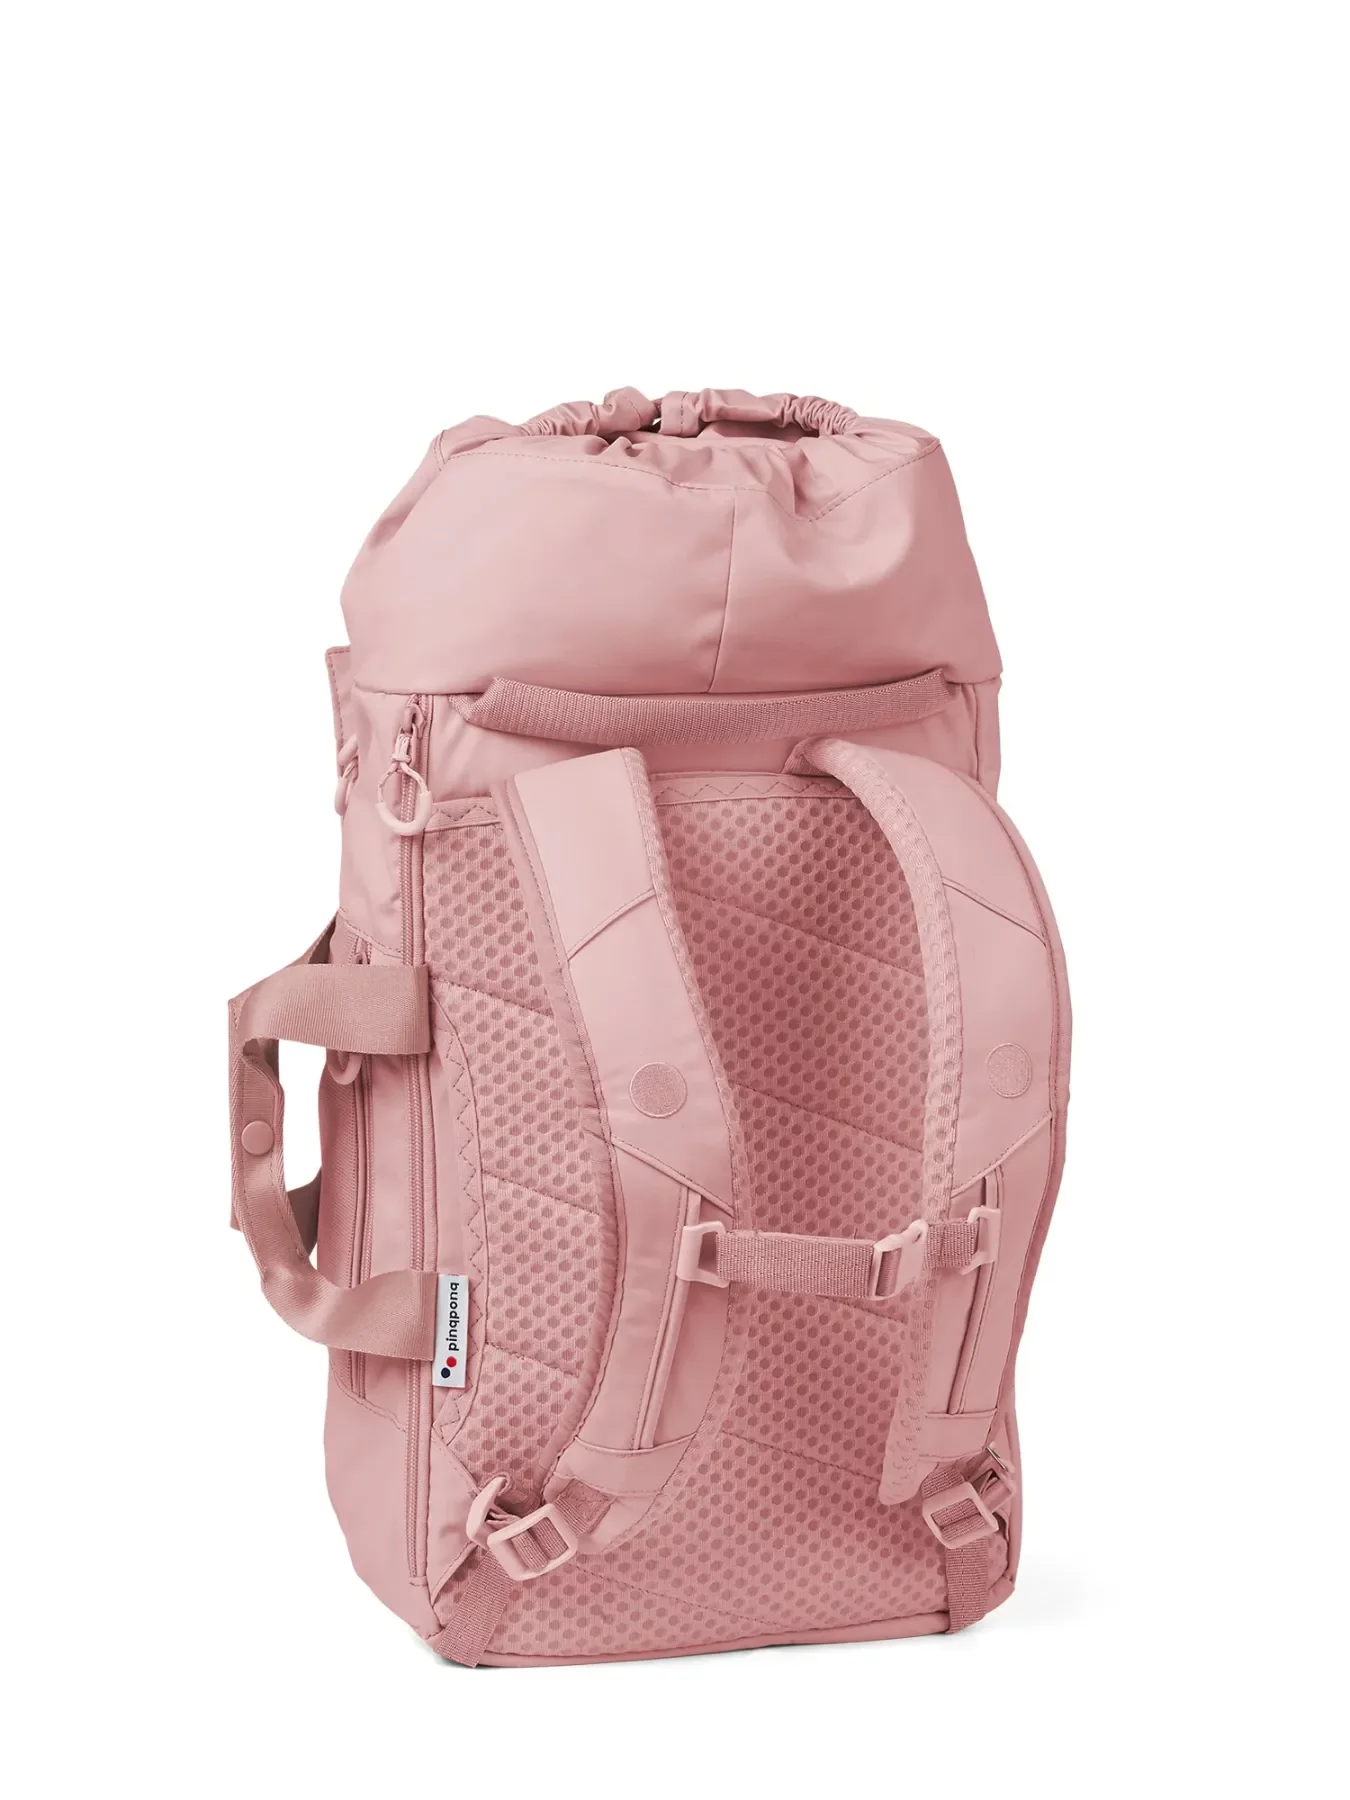 pinqponq Backpack BLOK medium - Ash Pink 5